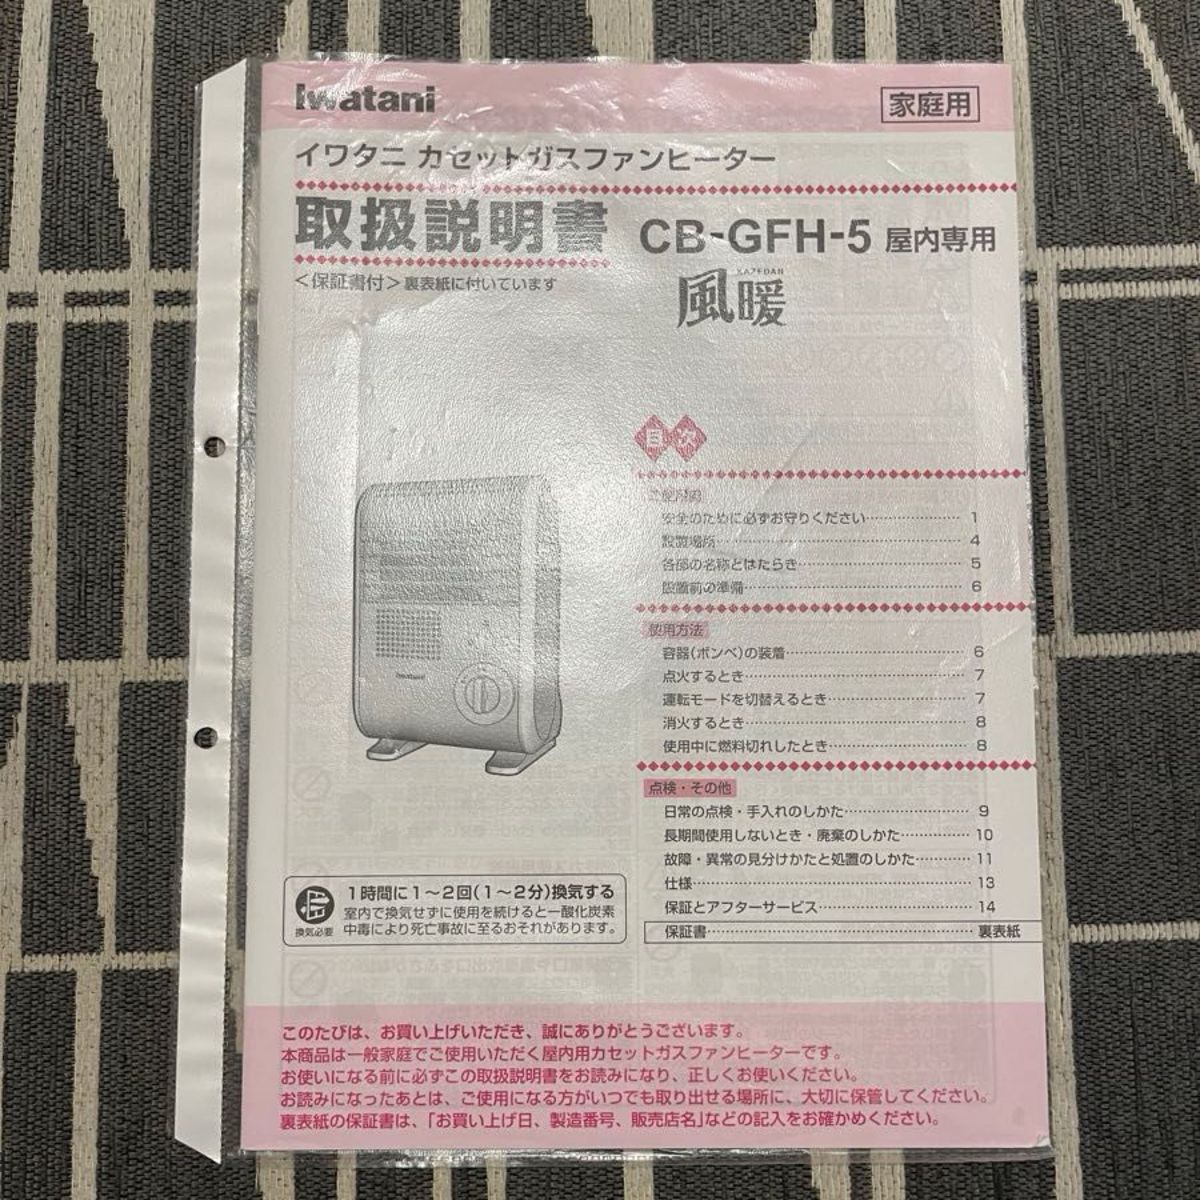 Iwatani 風暖 イワタニ カセットガス 風暖 CB-GFH-5